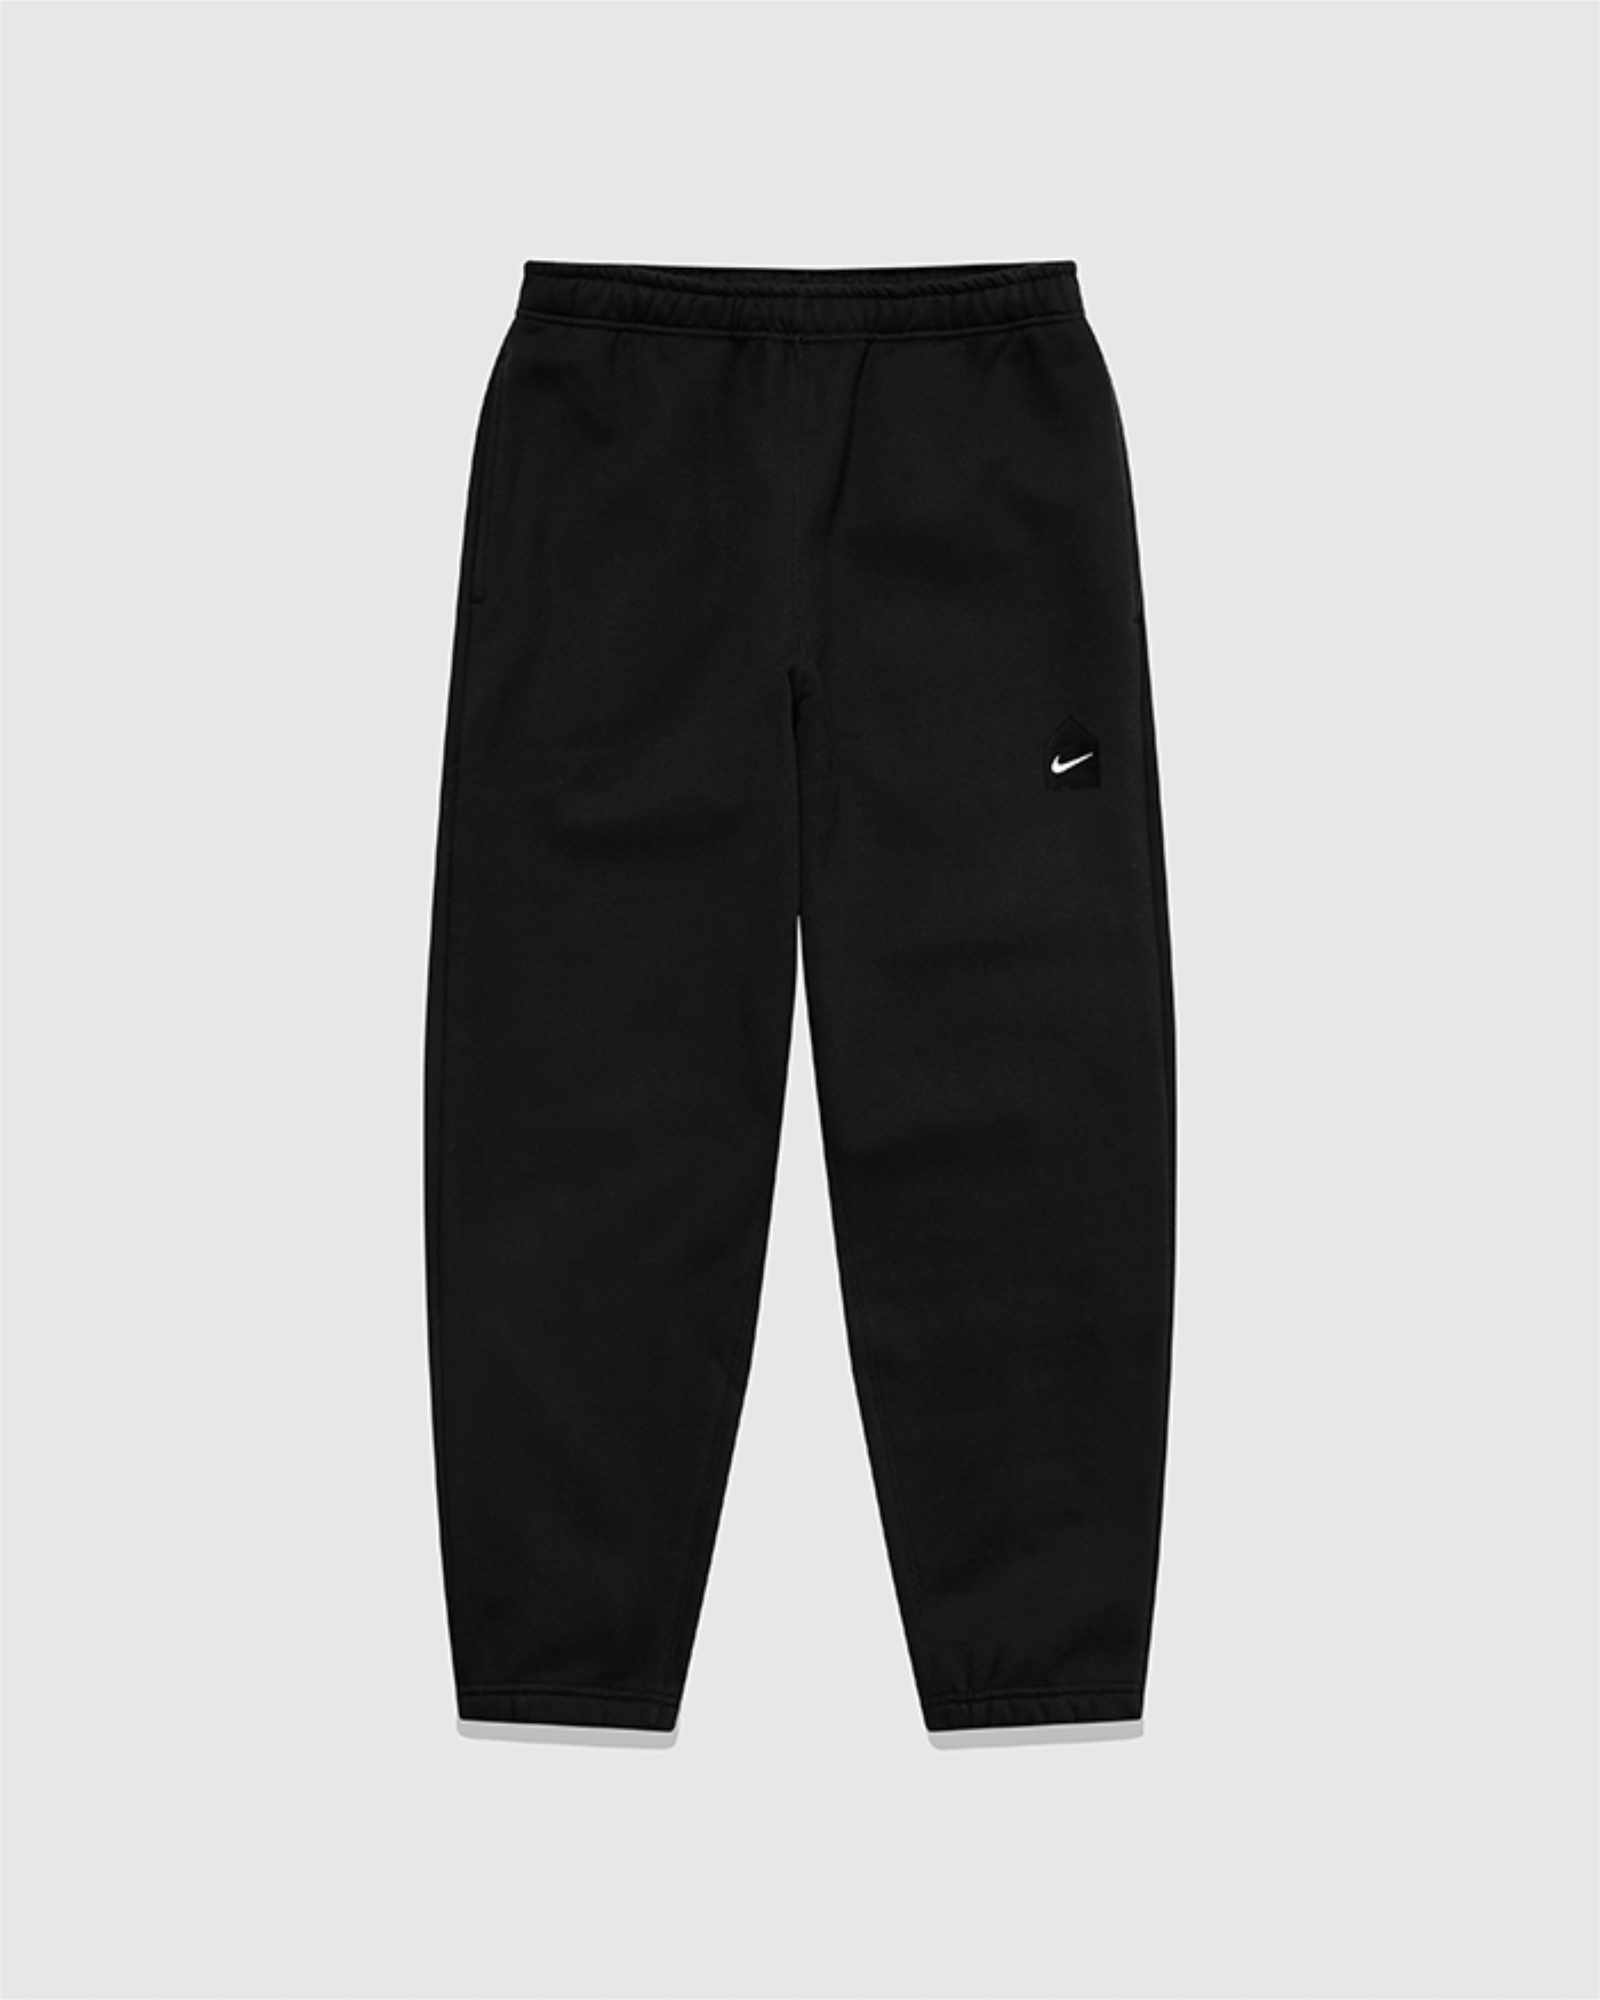 Nike & Dover Street Market's fleece sweats collab in grey, black, and navy